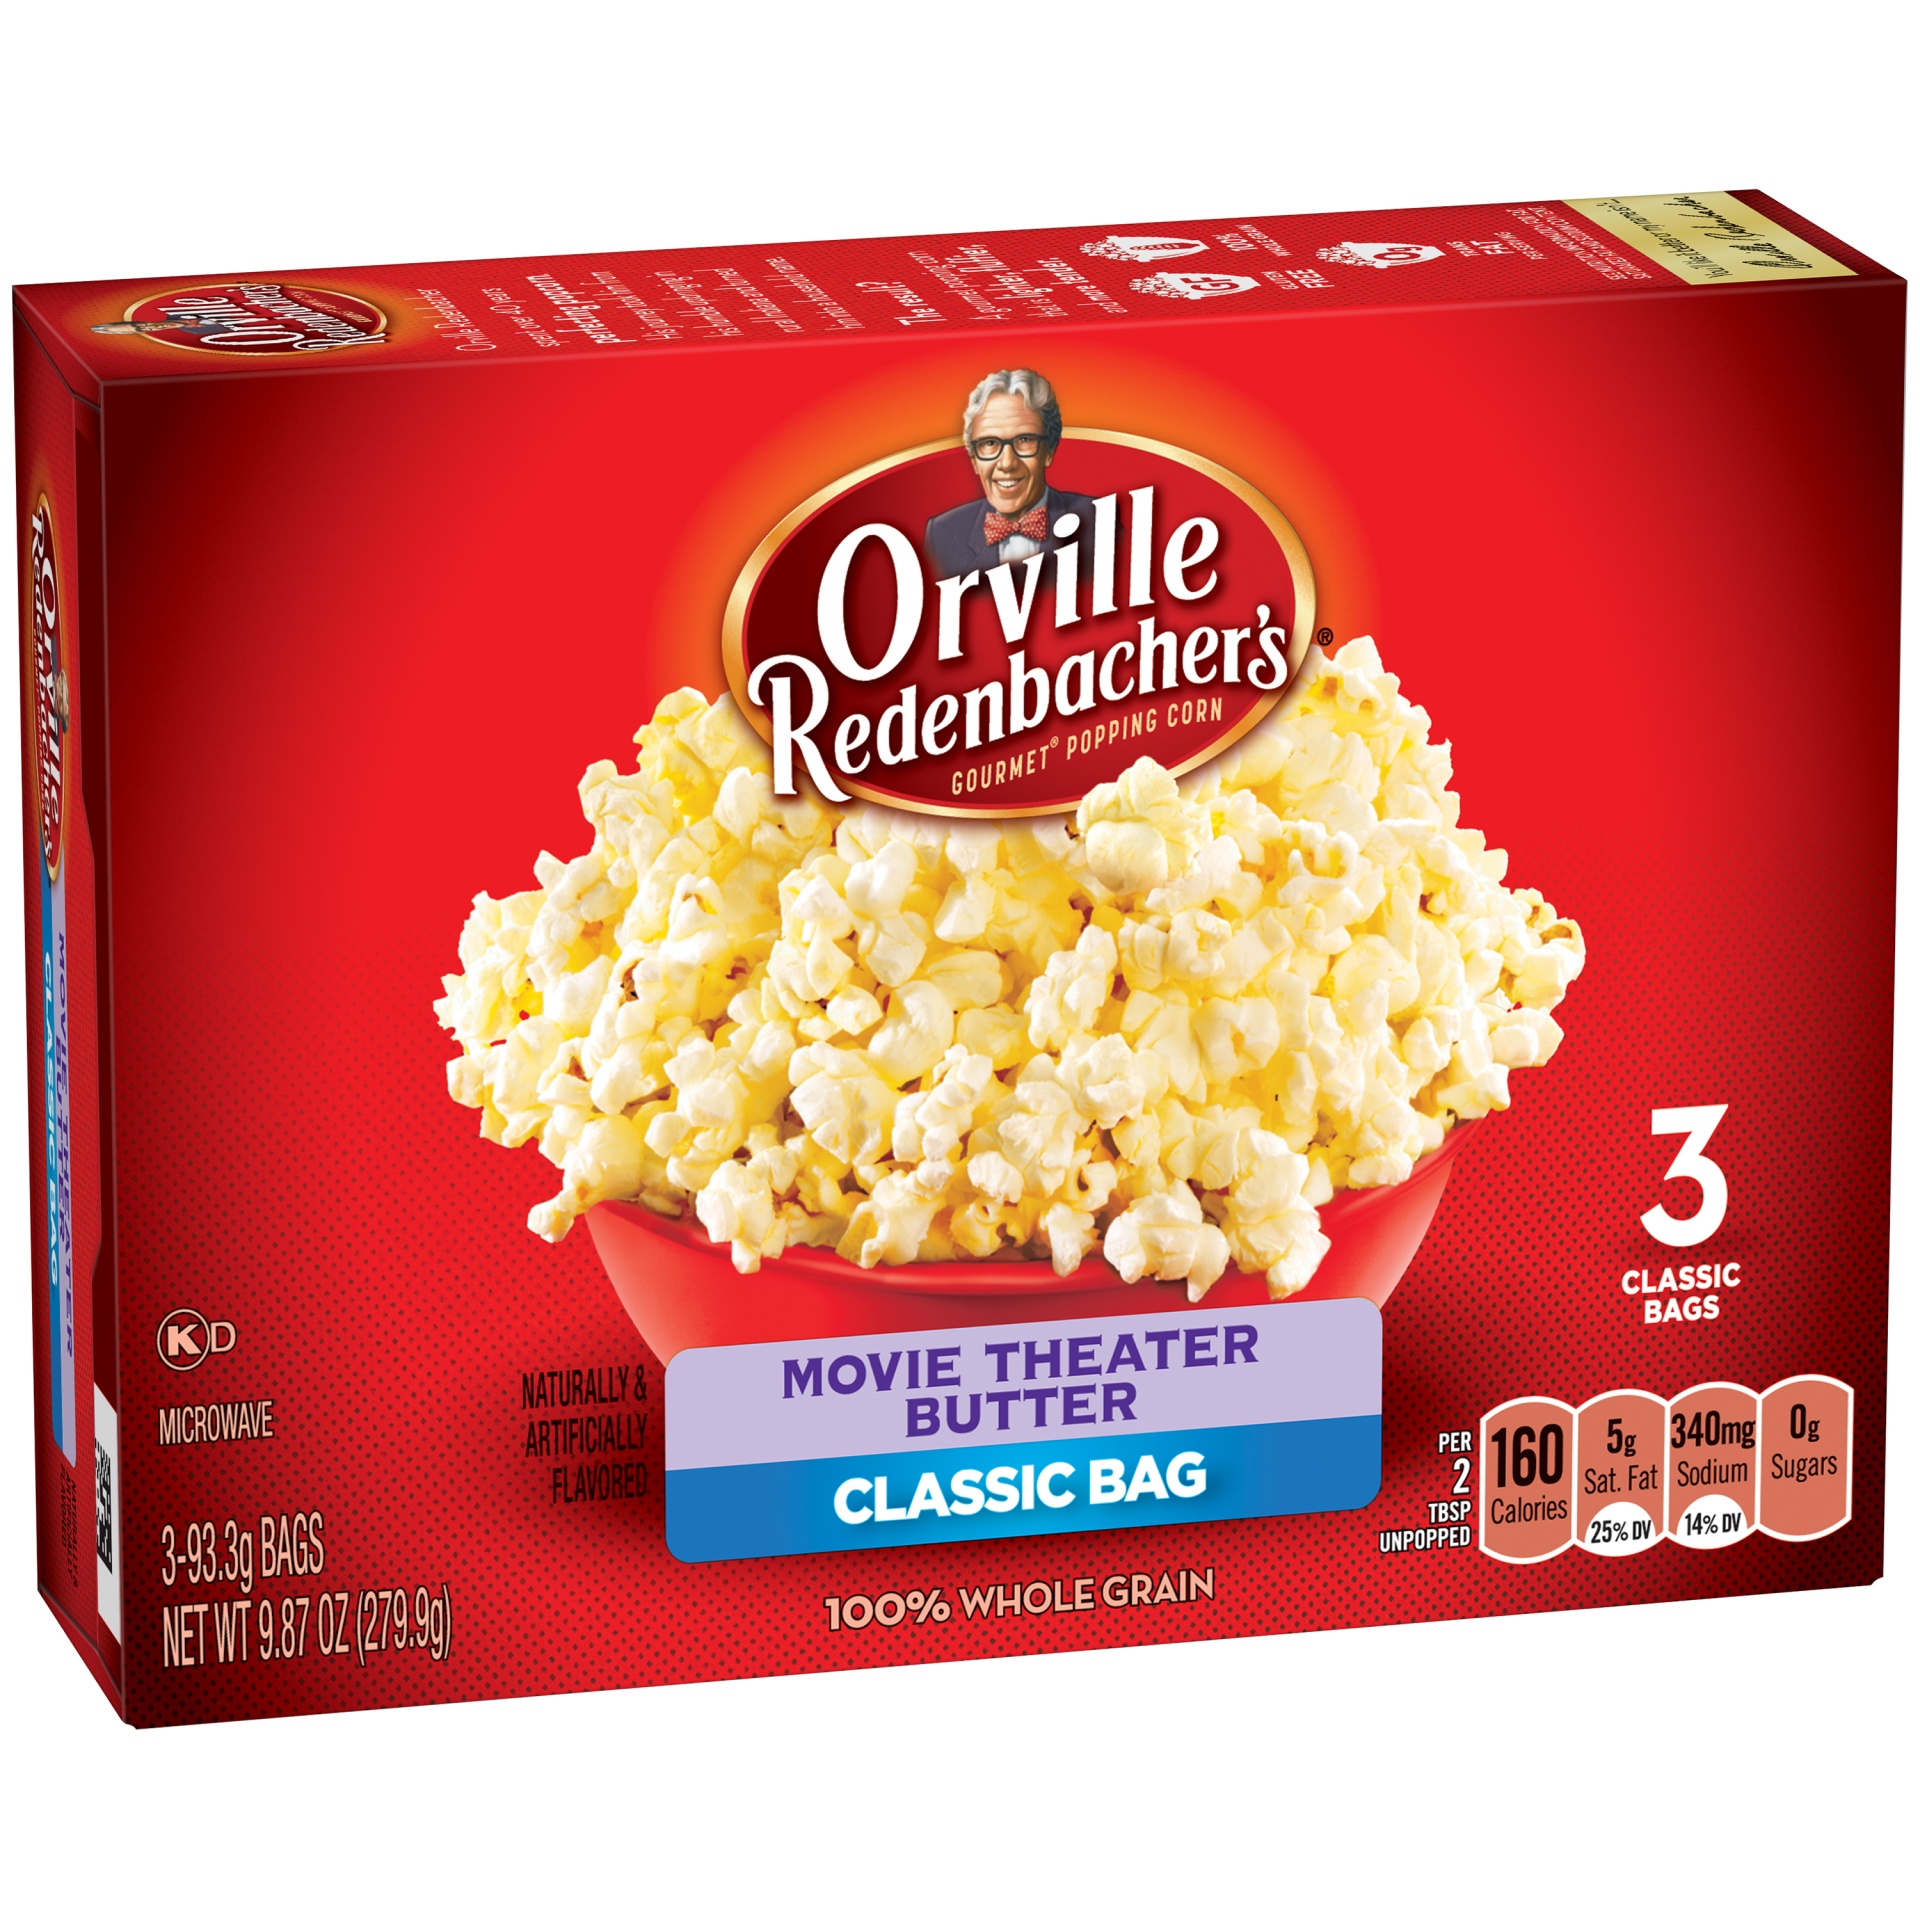 slide 1 of 1, Orville Redenbacher's Movie Theater Butter Classic Bag Gourmet Popping Corn, 3 ct